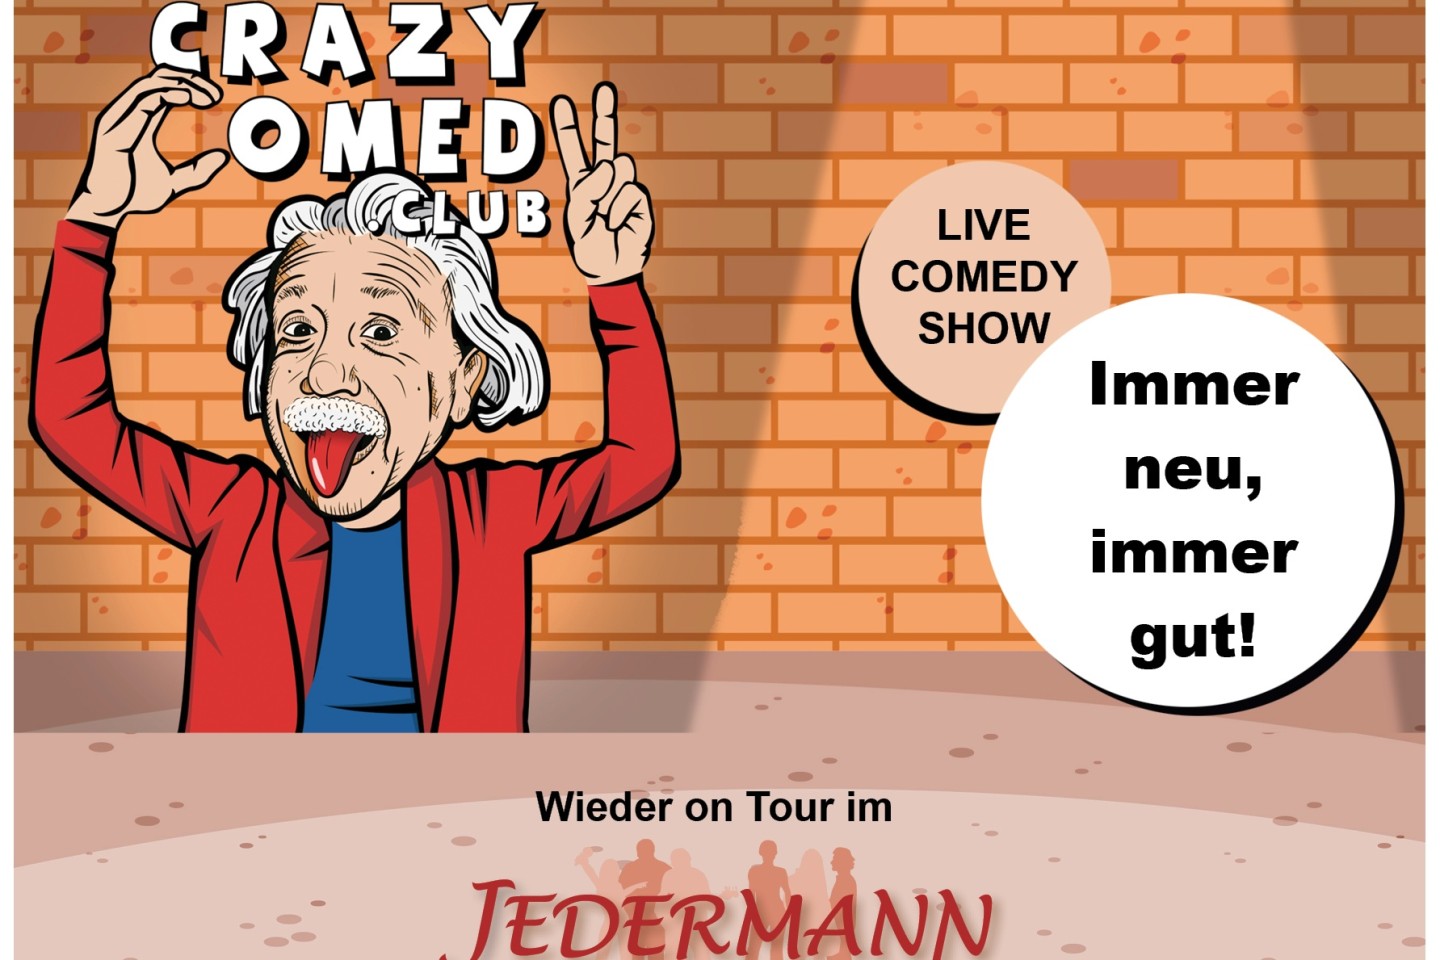 Crazy Comedy Club im Jedermann